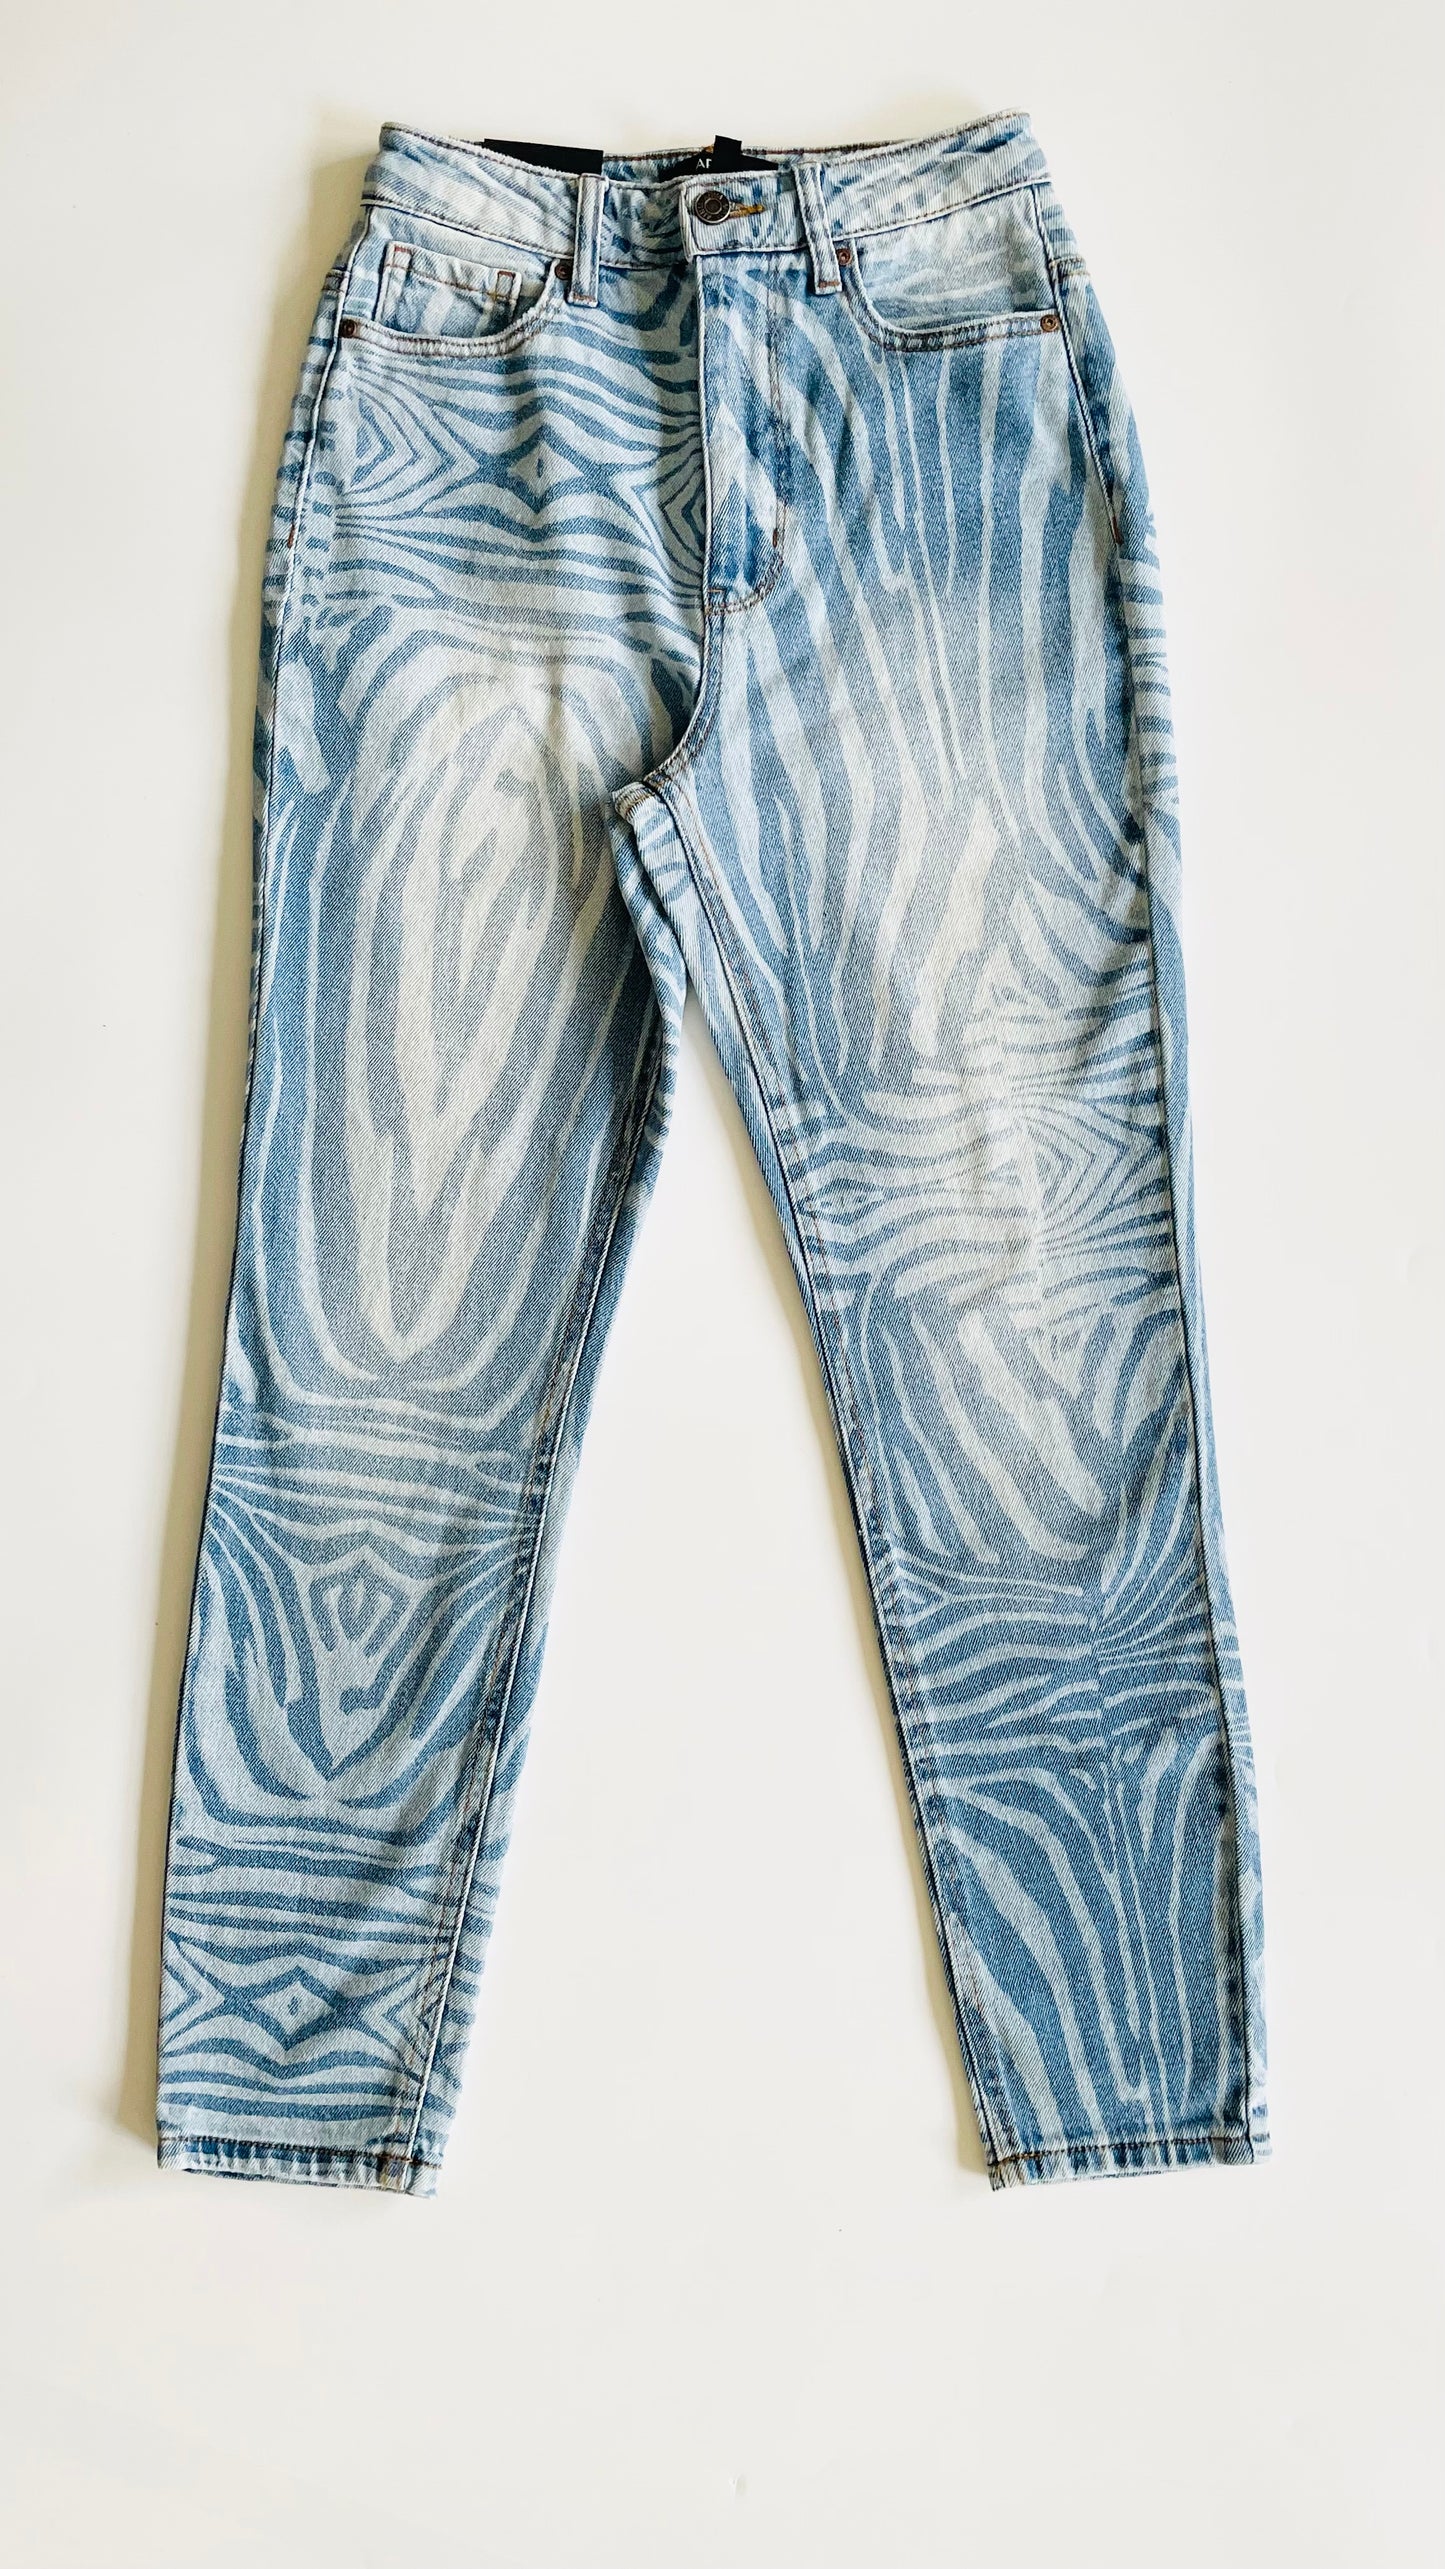 Pre-Loved AFRM blue zebra print slim fit jeans - Size 25 x 28